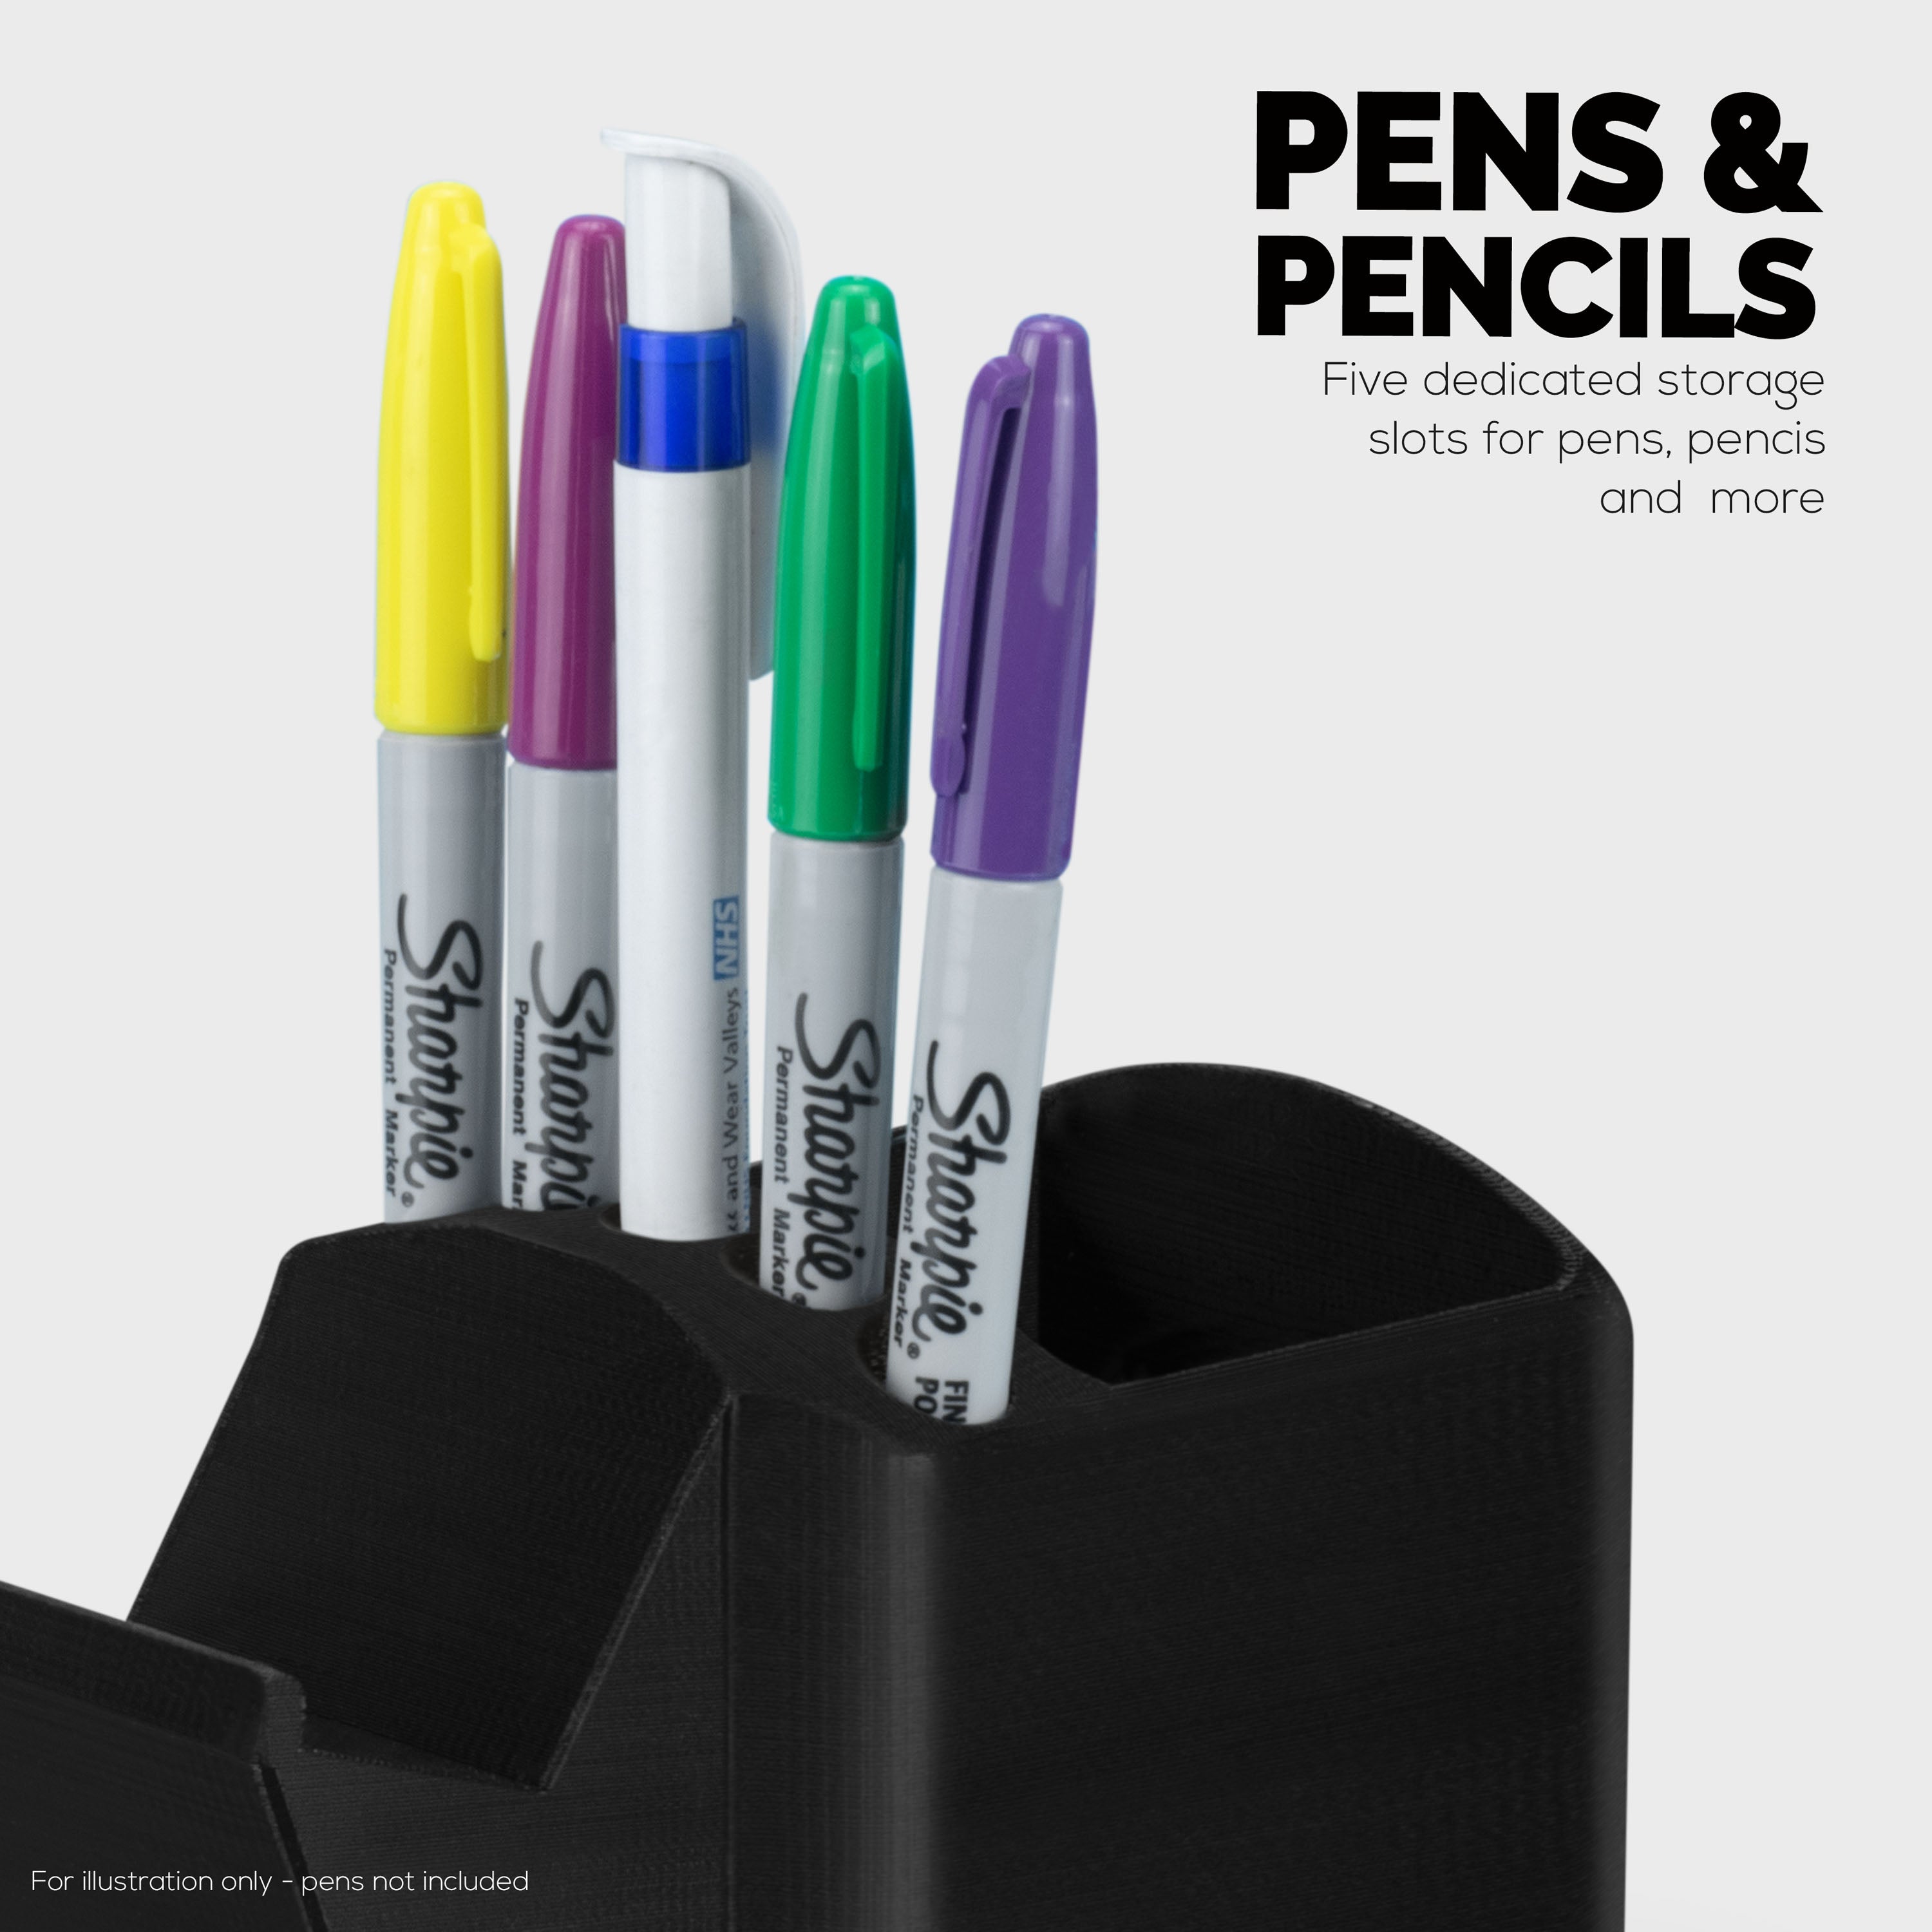 Brainwavz Pen Holder & Desktop Stationary Organizer, TV Remote Control & Office Supplies, for Pens, Pencils, Scissors, Staplers Other Small Home